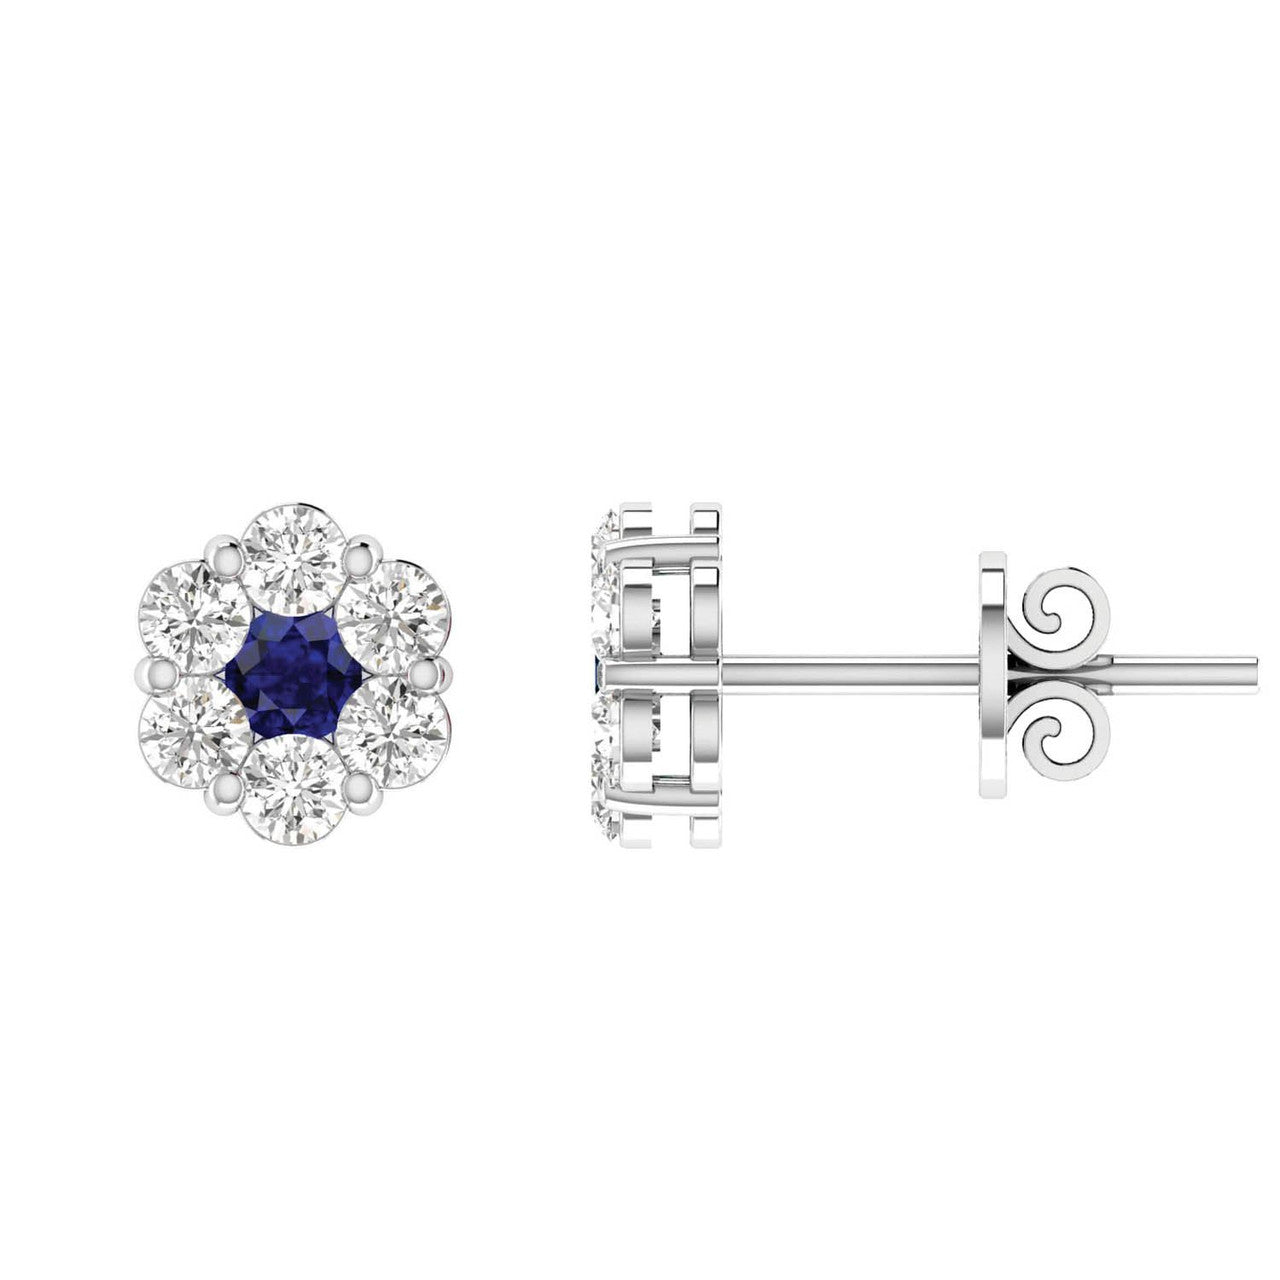 Ice Jewellery Sapphire Diamond Stud Earrings with 0.24ct Diamonds in 9K White Gold - 9WRE33GHS | Ice Jewellery Australia